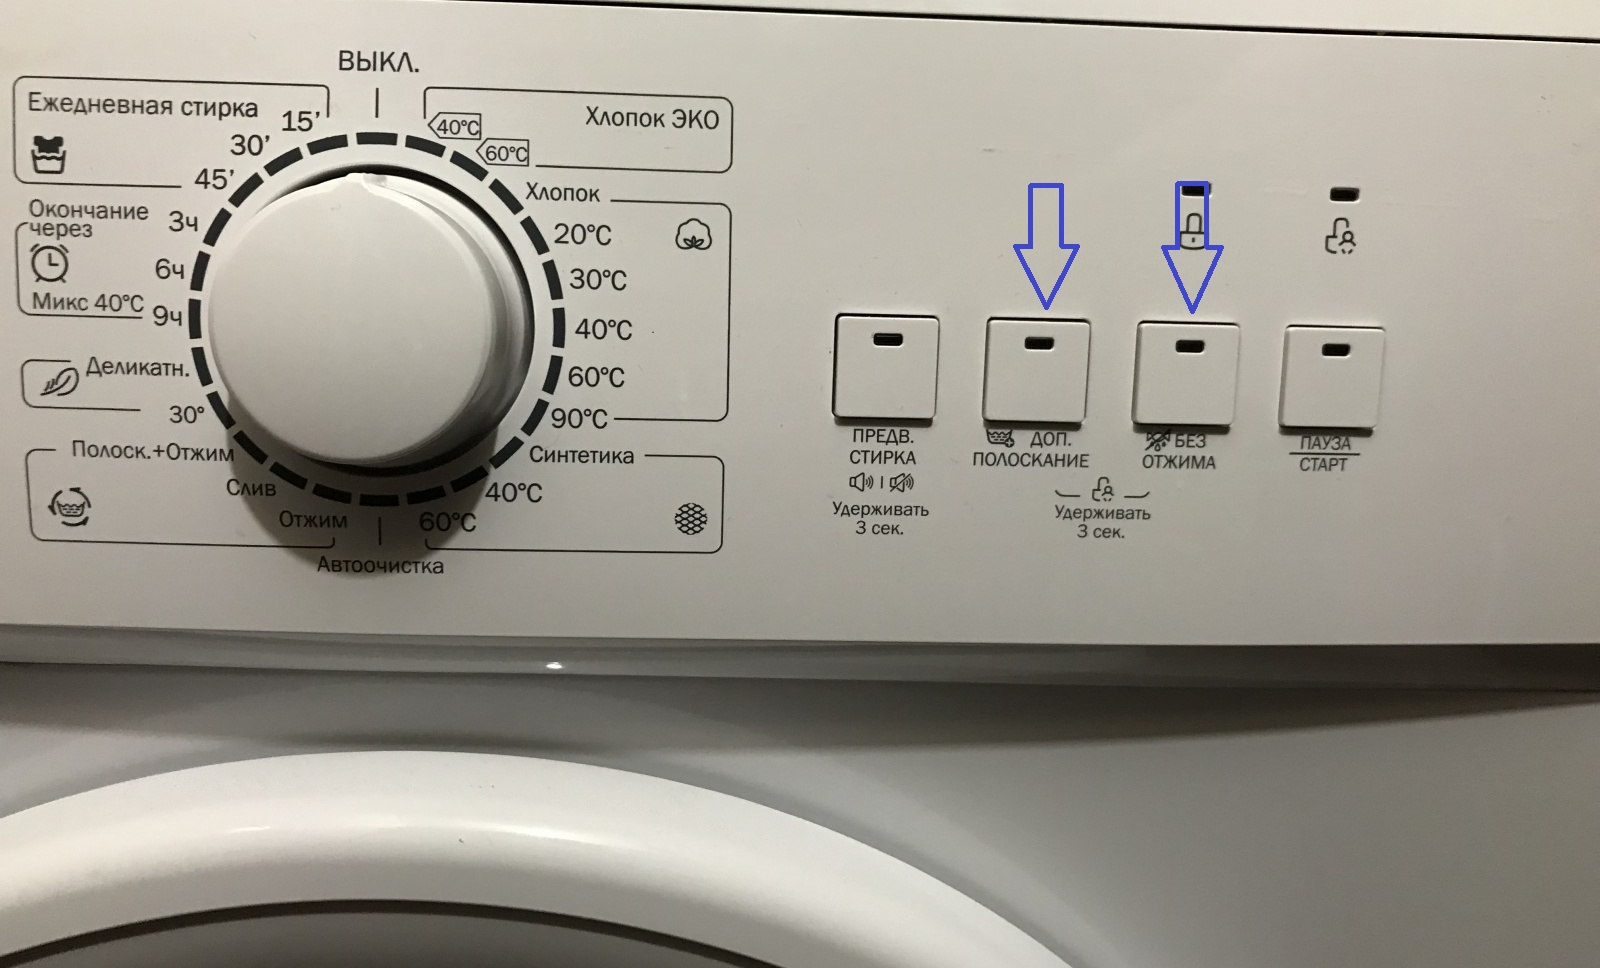 Deexp kinderslot wasmachine